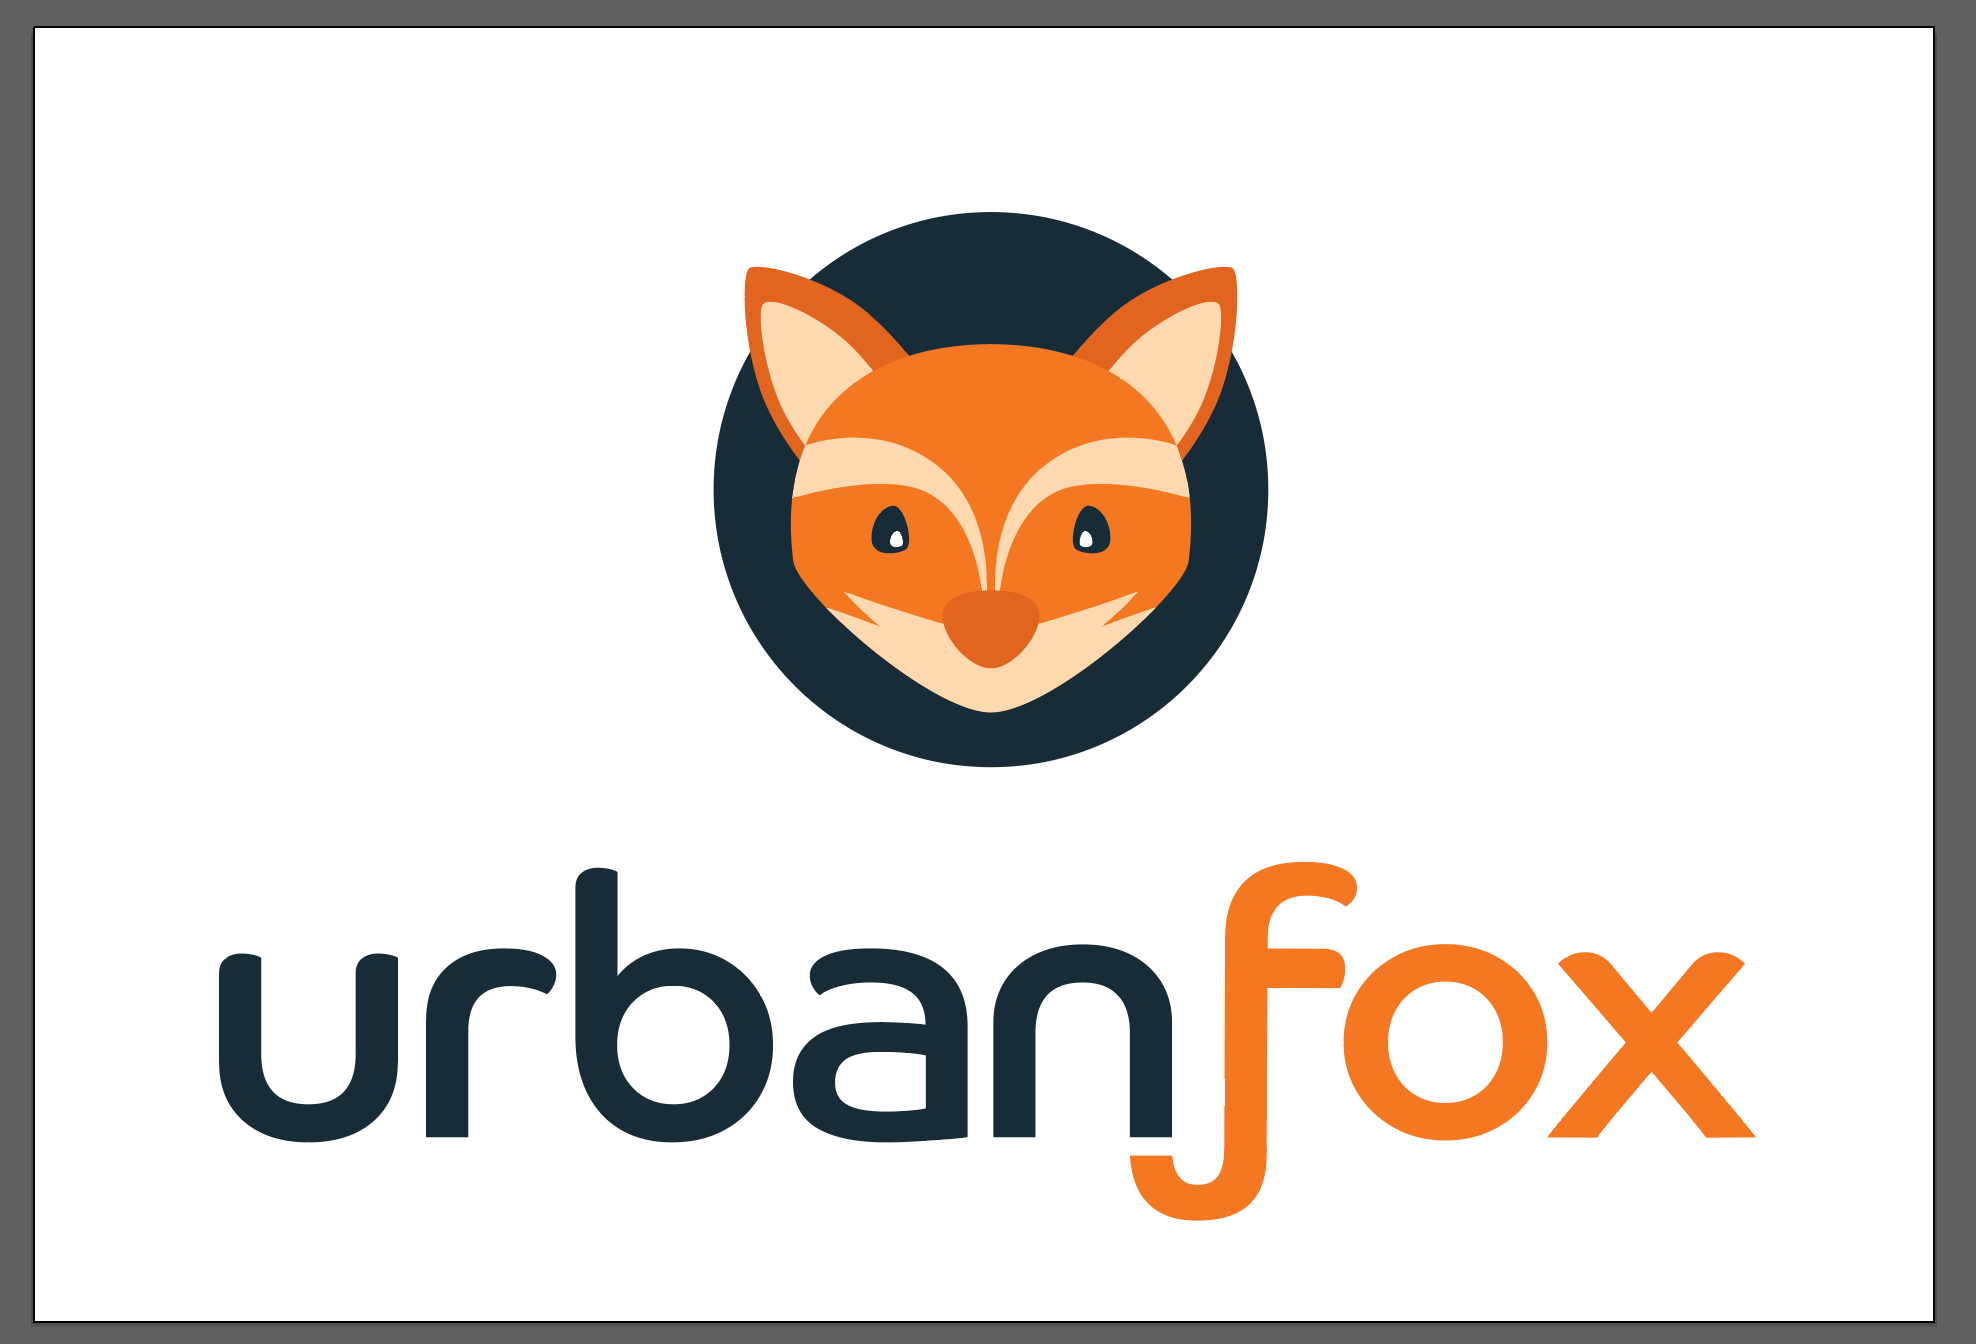 Organisation Logo - Urban Fox Network Ltd